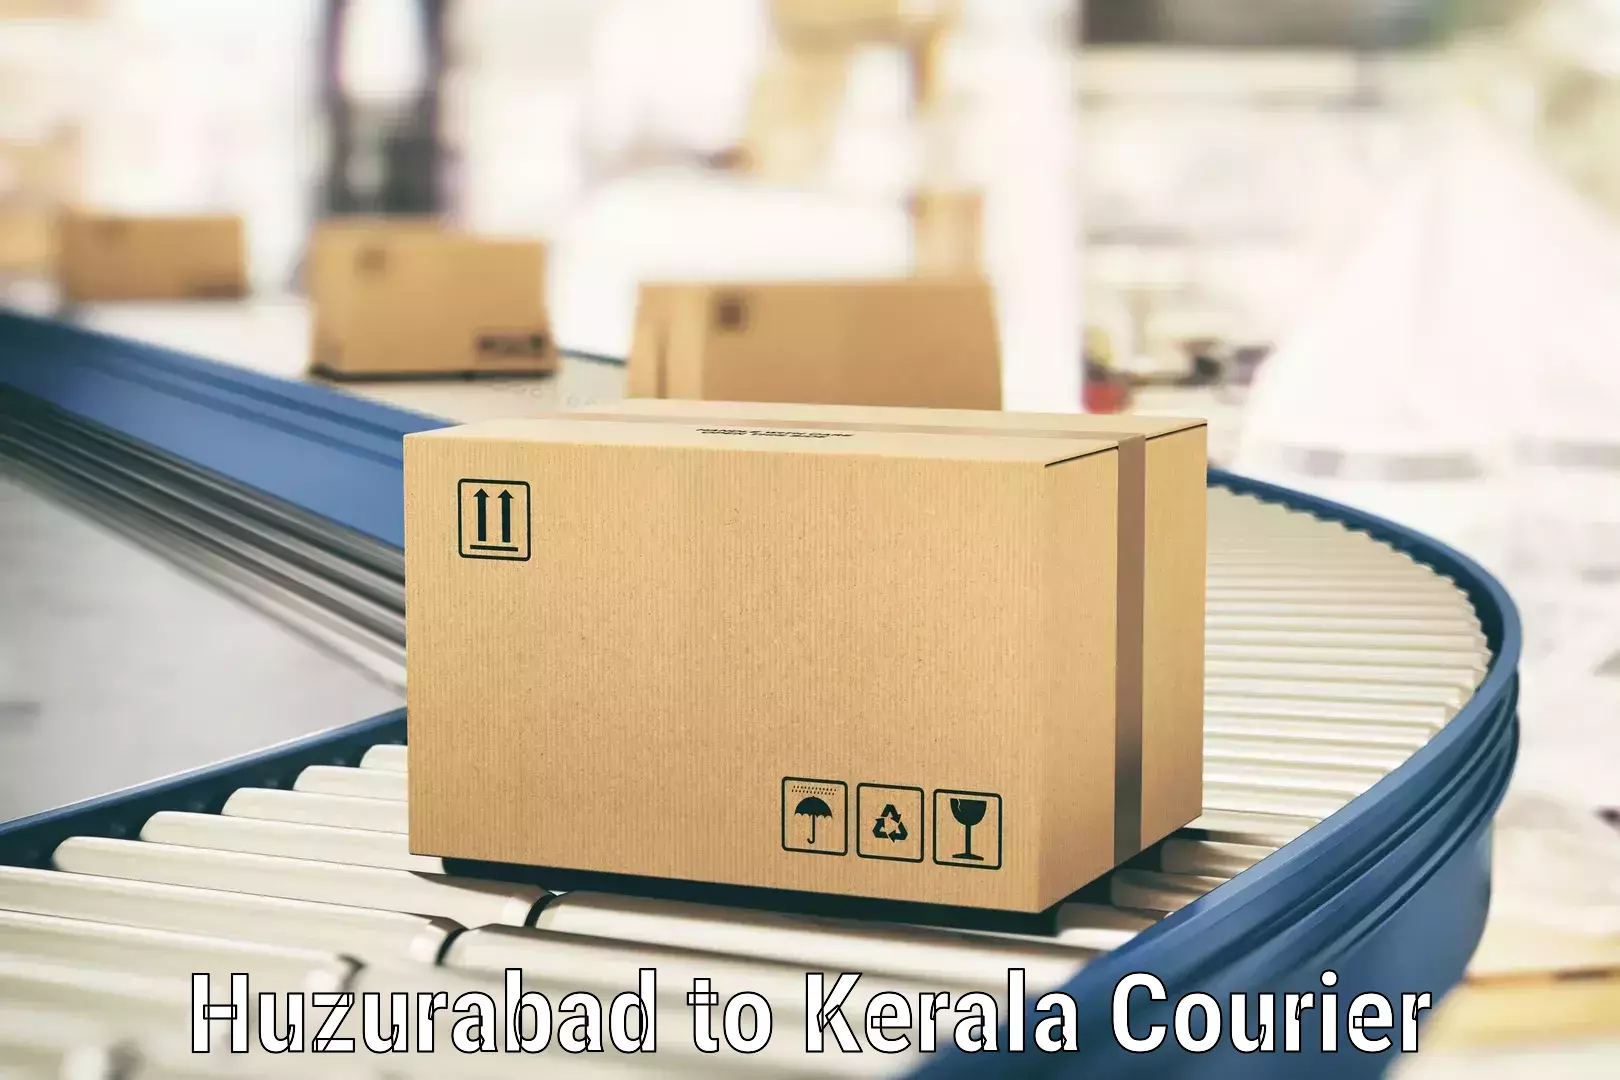 Seamless shipping experience in Huzurabad to Kerala